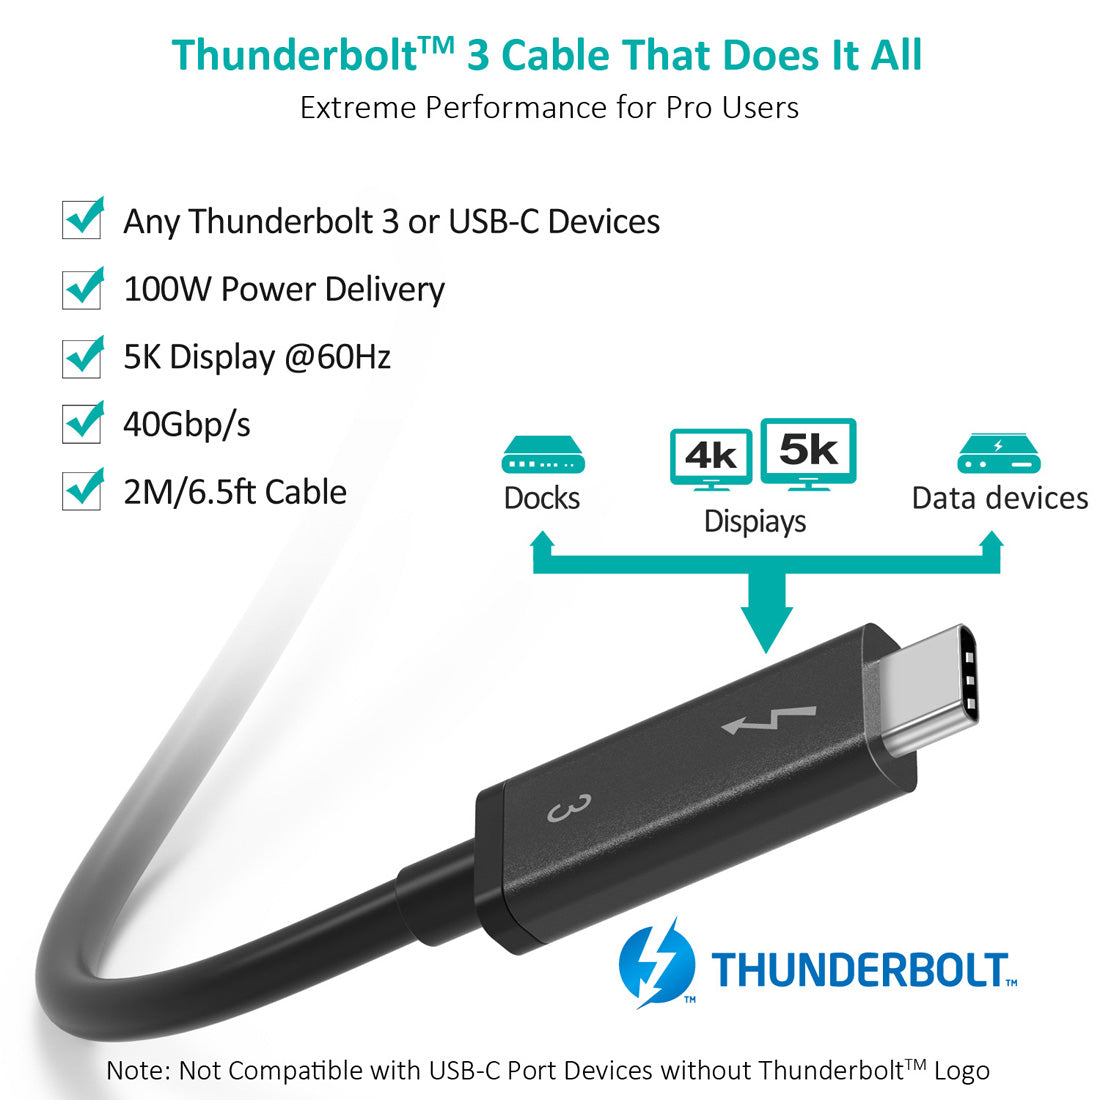 Thunderbolt 3 USB C Kabel (2M/6.5FT) Aktiv 40Gbps/100W Ladeunterstützung 5K UHD Display